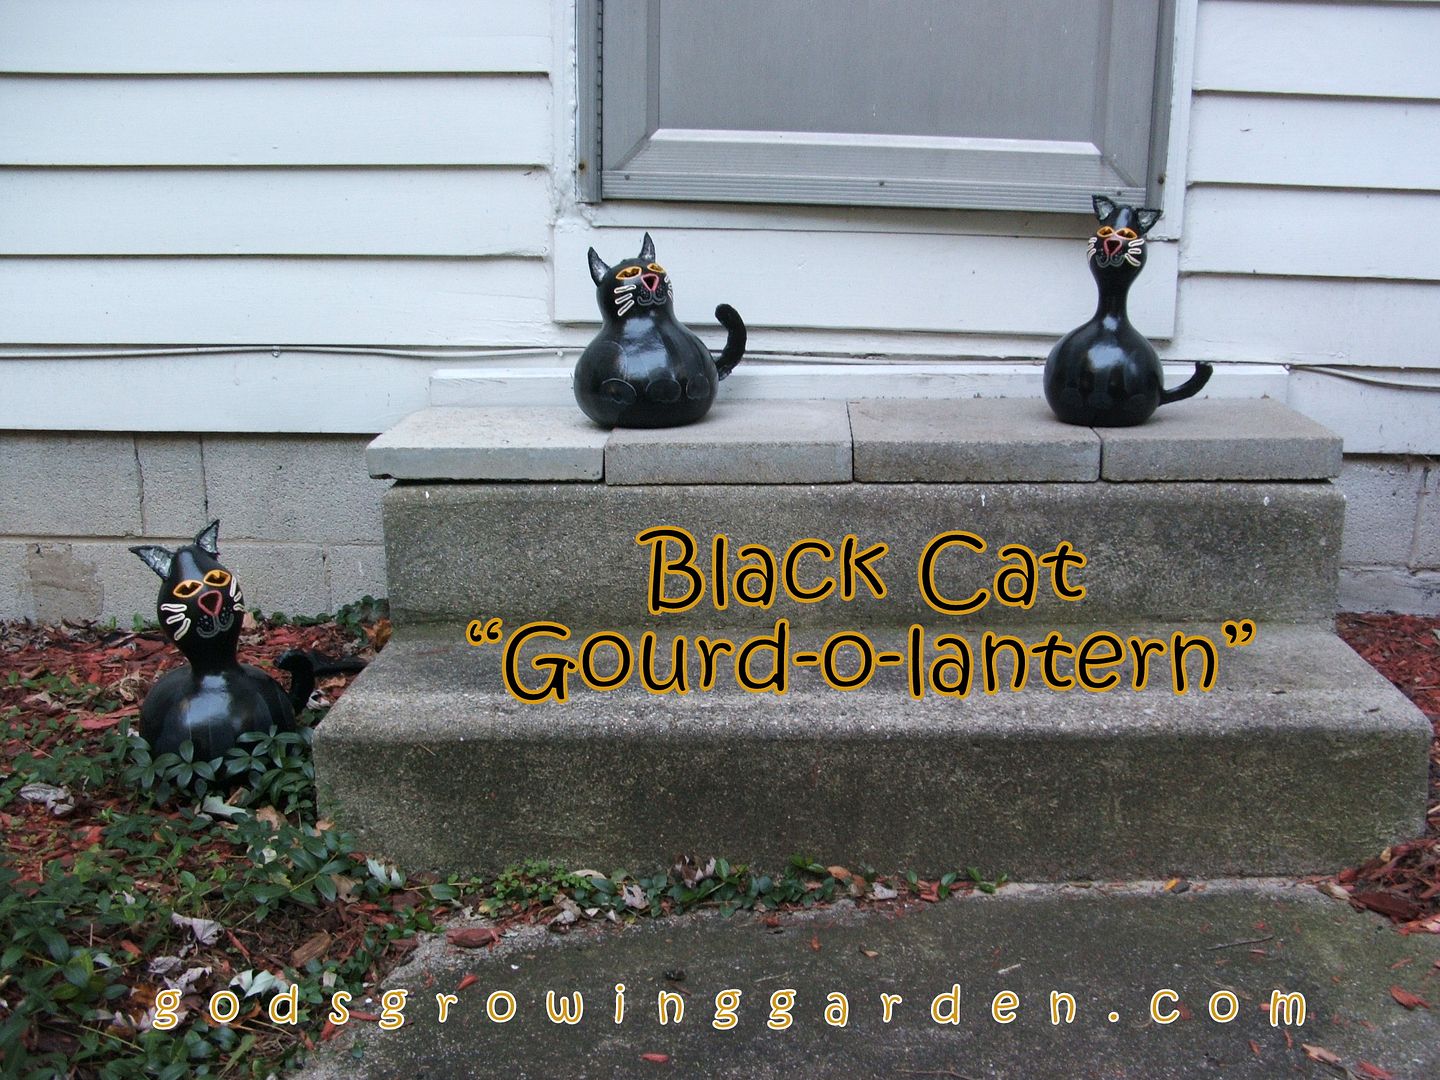 Black Cat Gourd-o-lanterns by Angie Ouellette-Tower for godsgrowinggarden.com photo DSCF1952_zpsfef94ea3.jpg